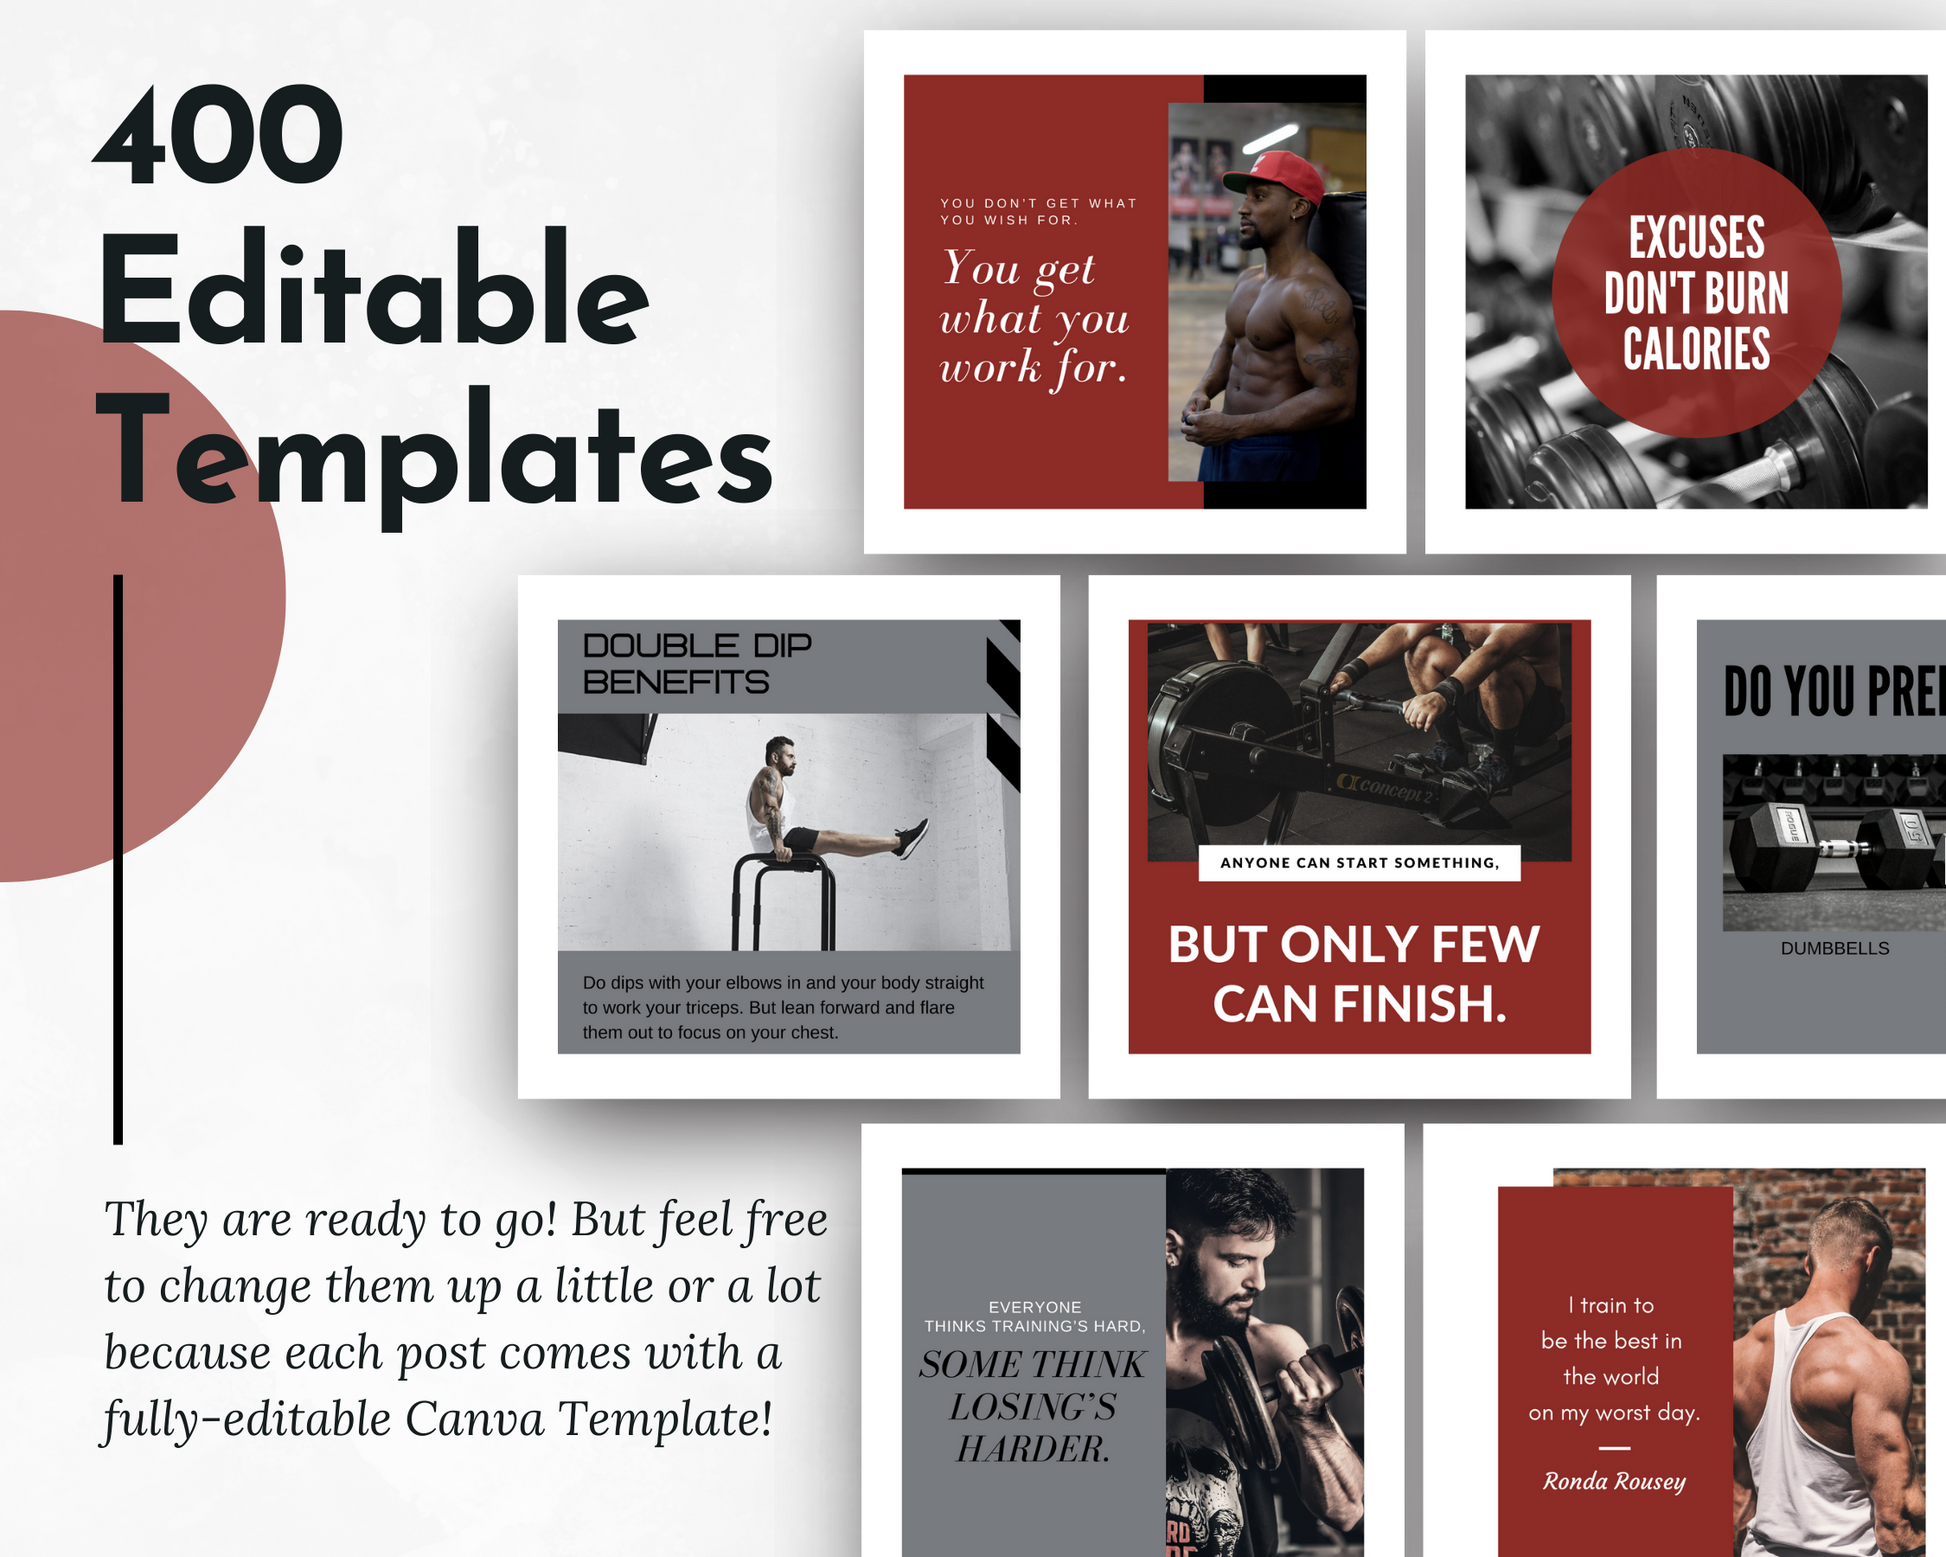 400 editable Men's Fitness Canva templates for social media content.